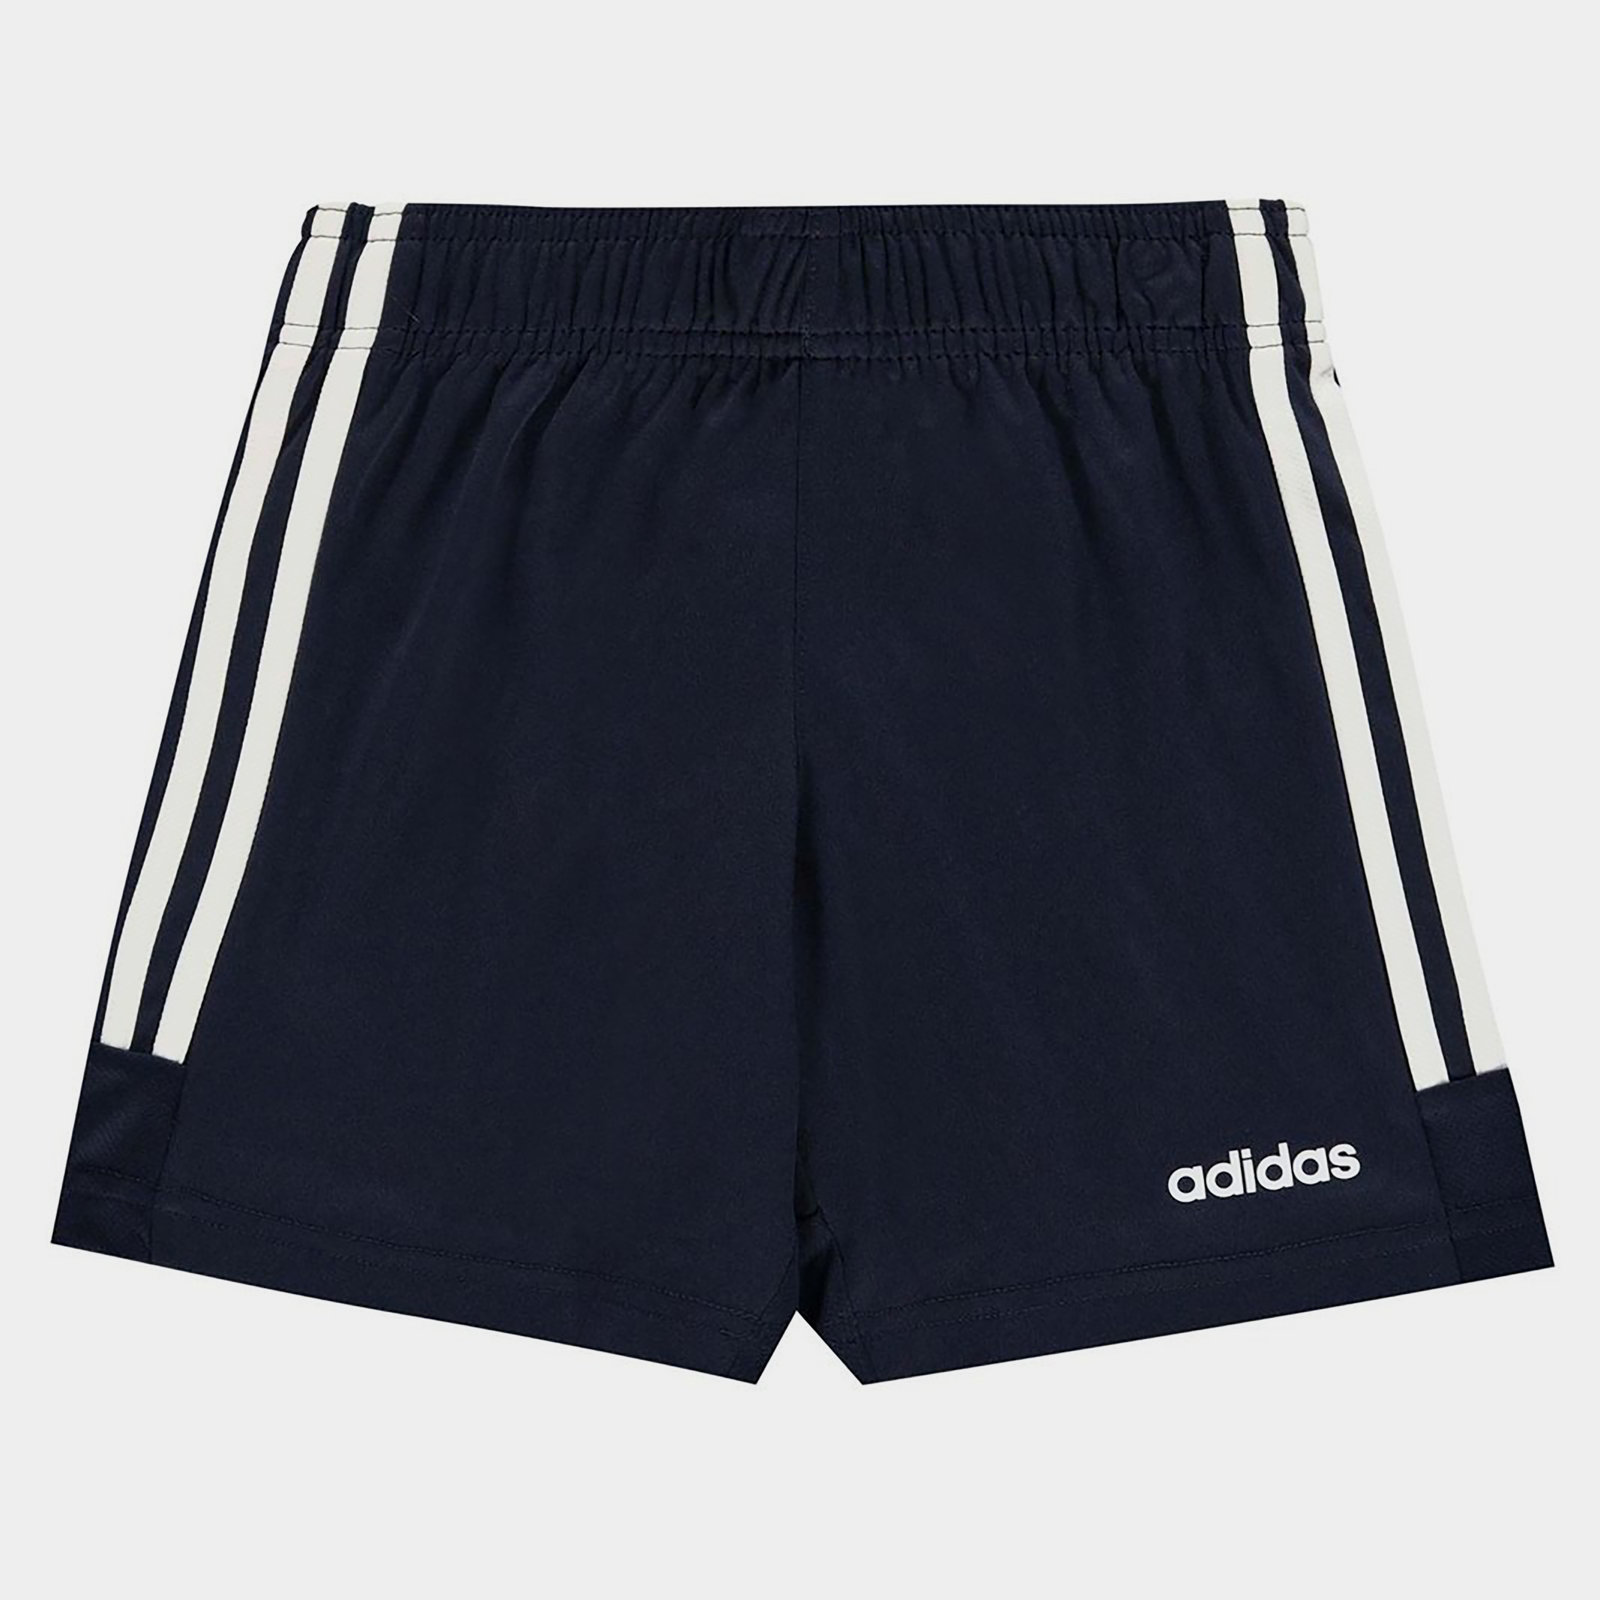 adidas nova 14 shorts